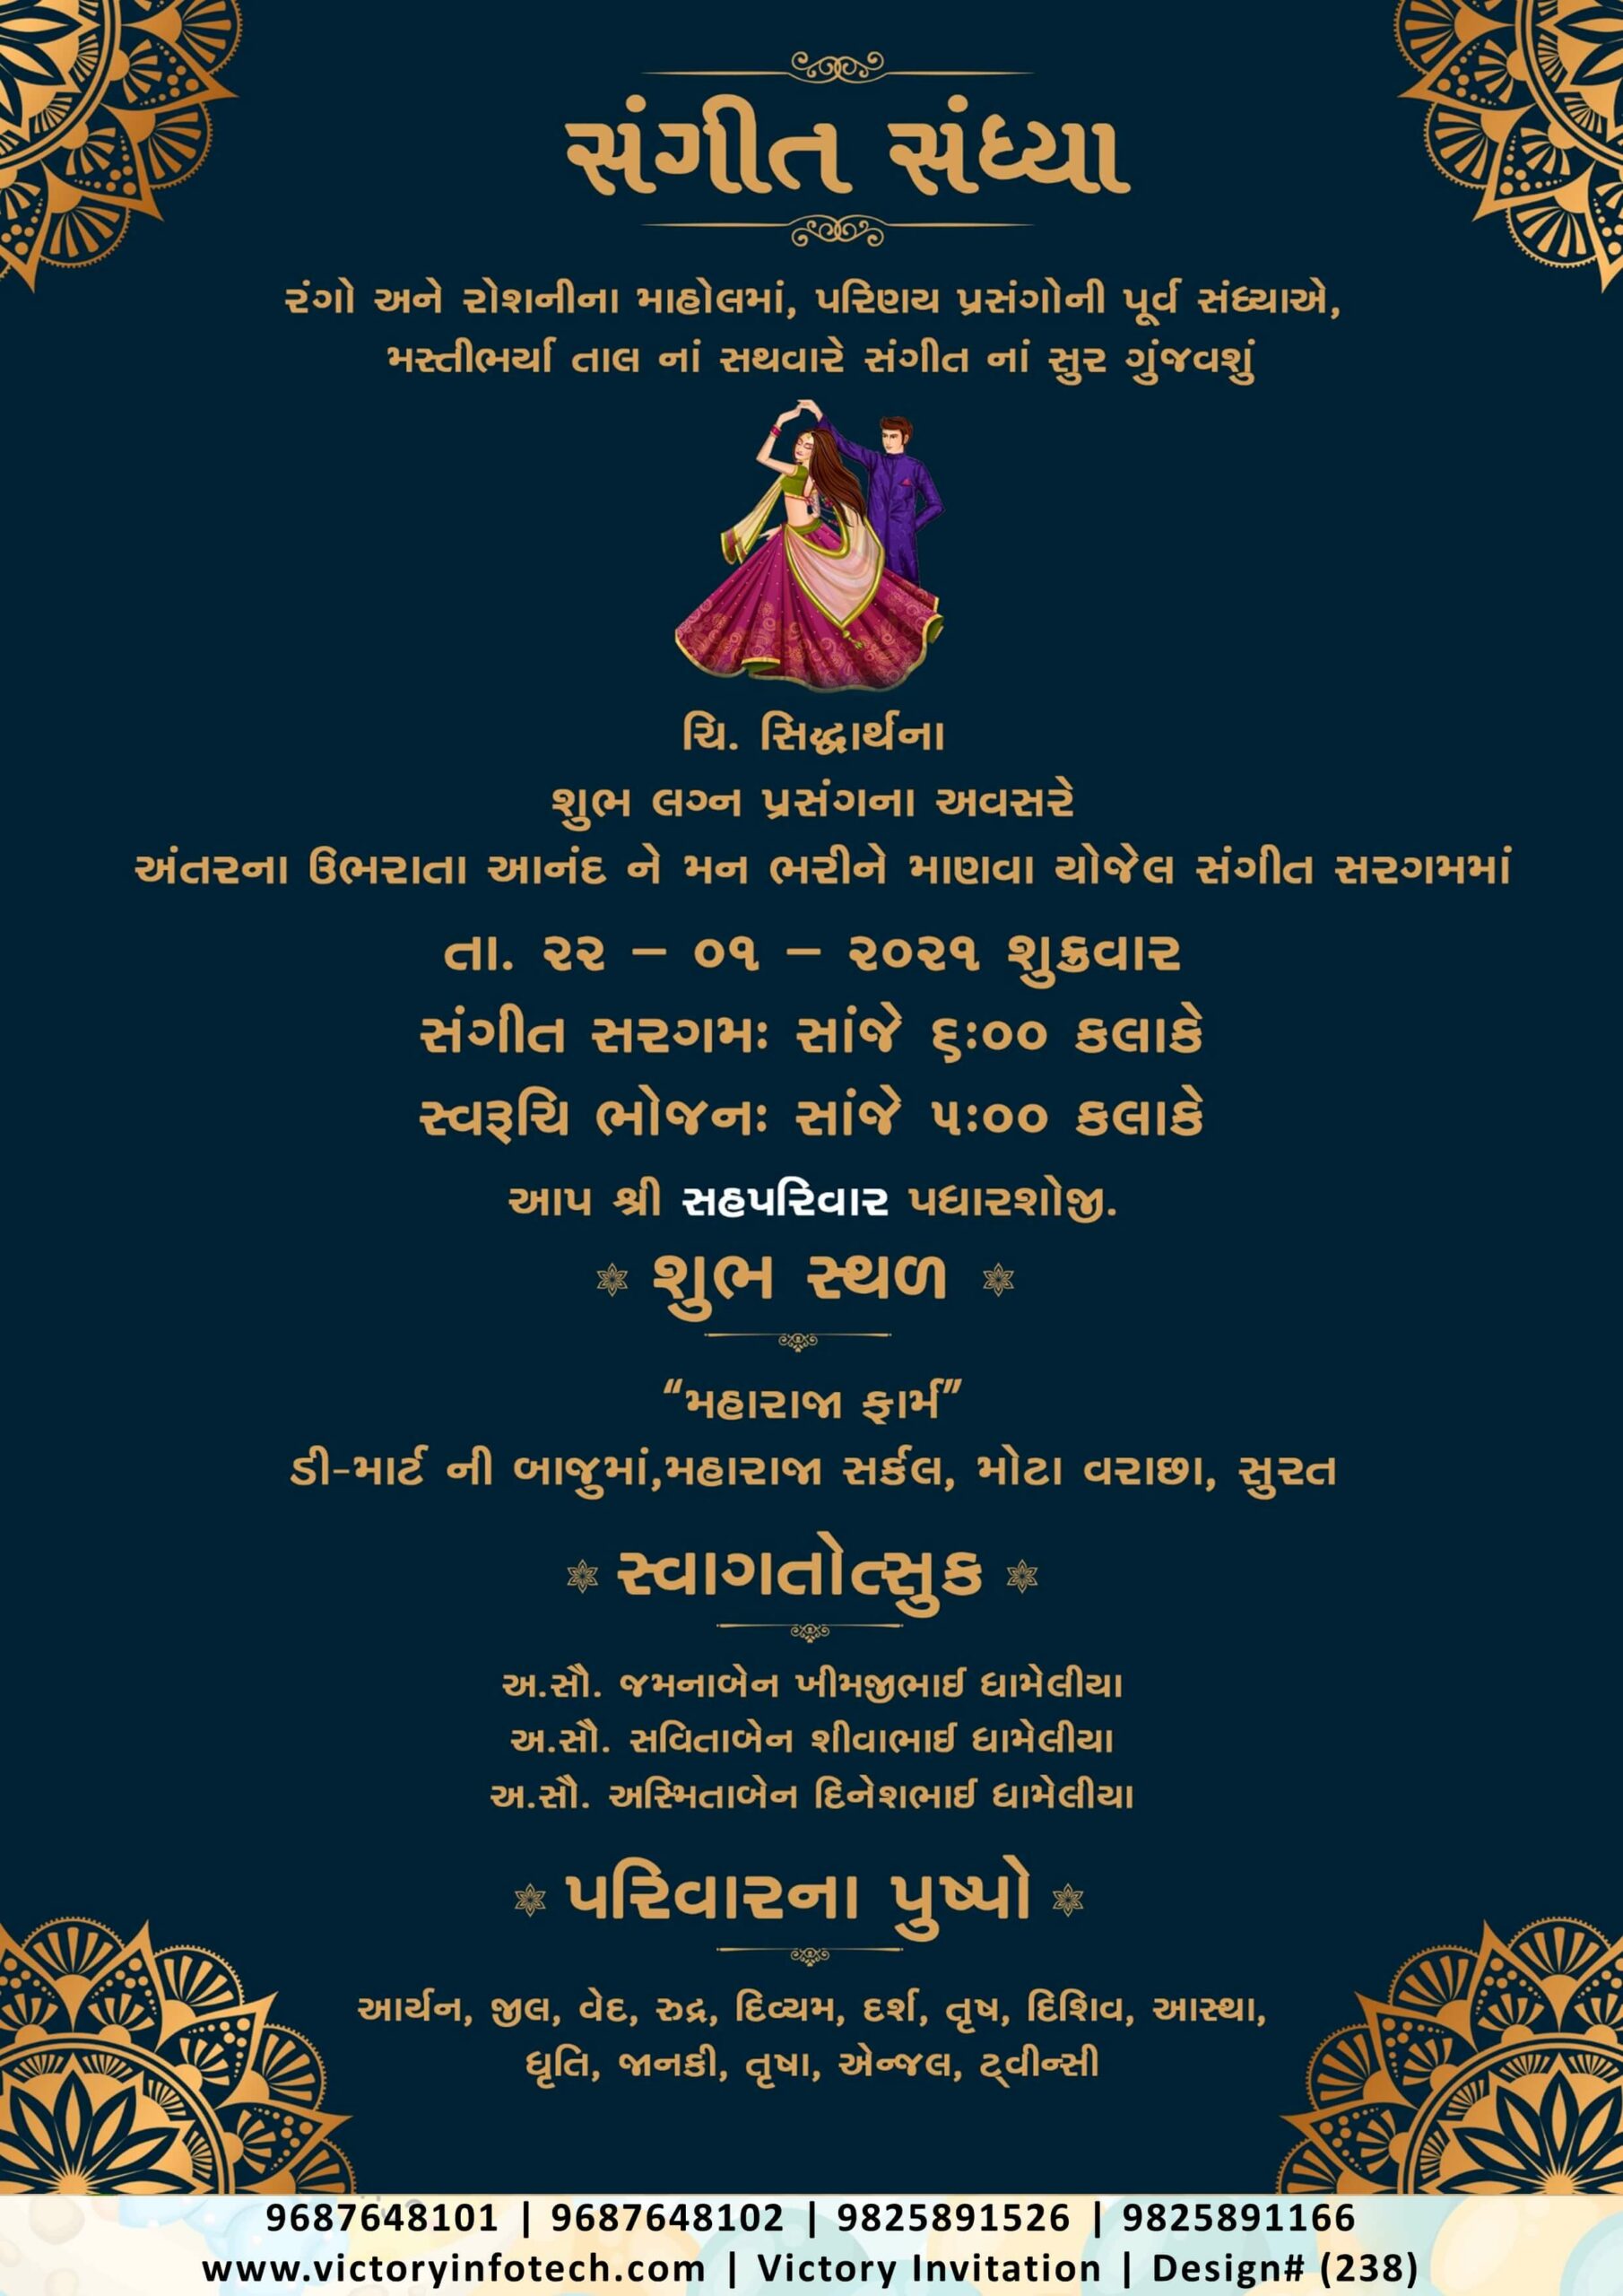 Sangeet Ceremony digital invitation card in gujarati design no.238